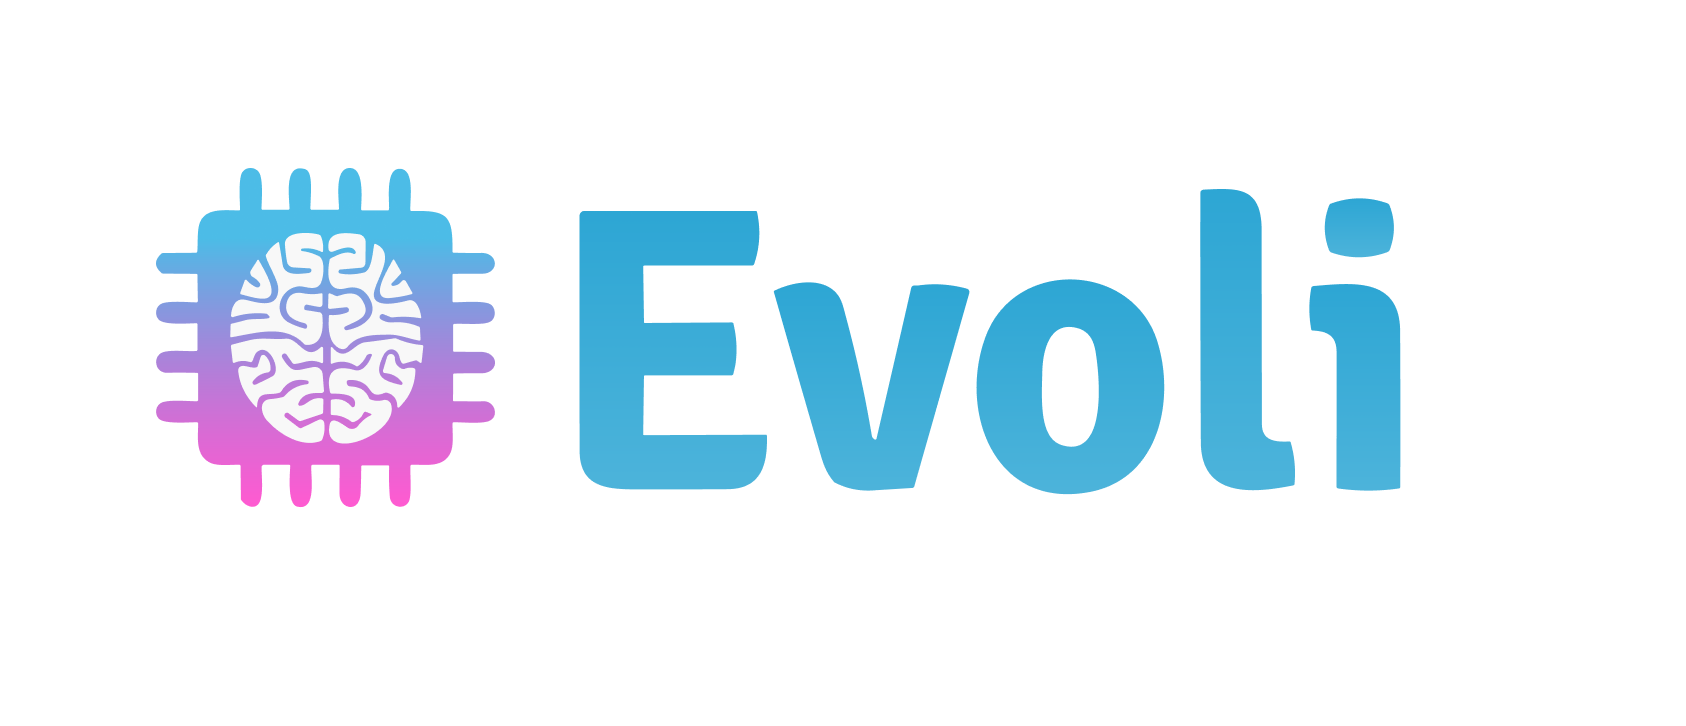 Evoli Logo